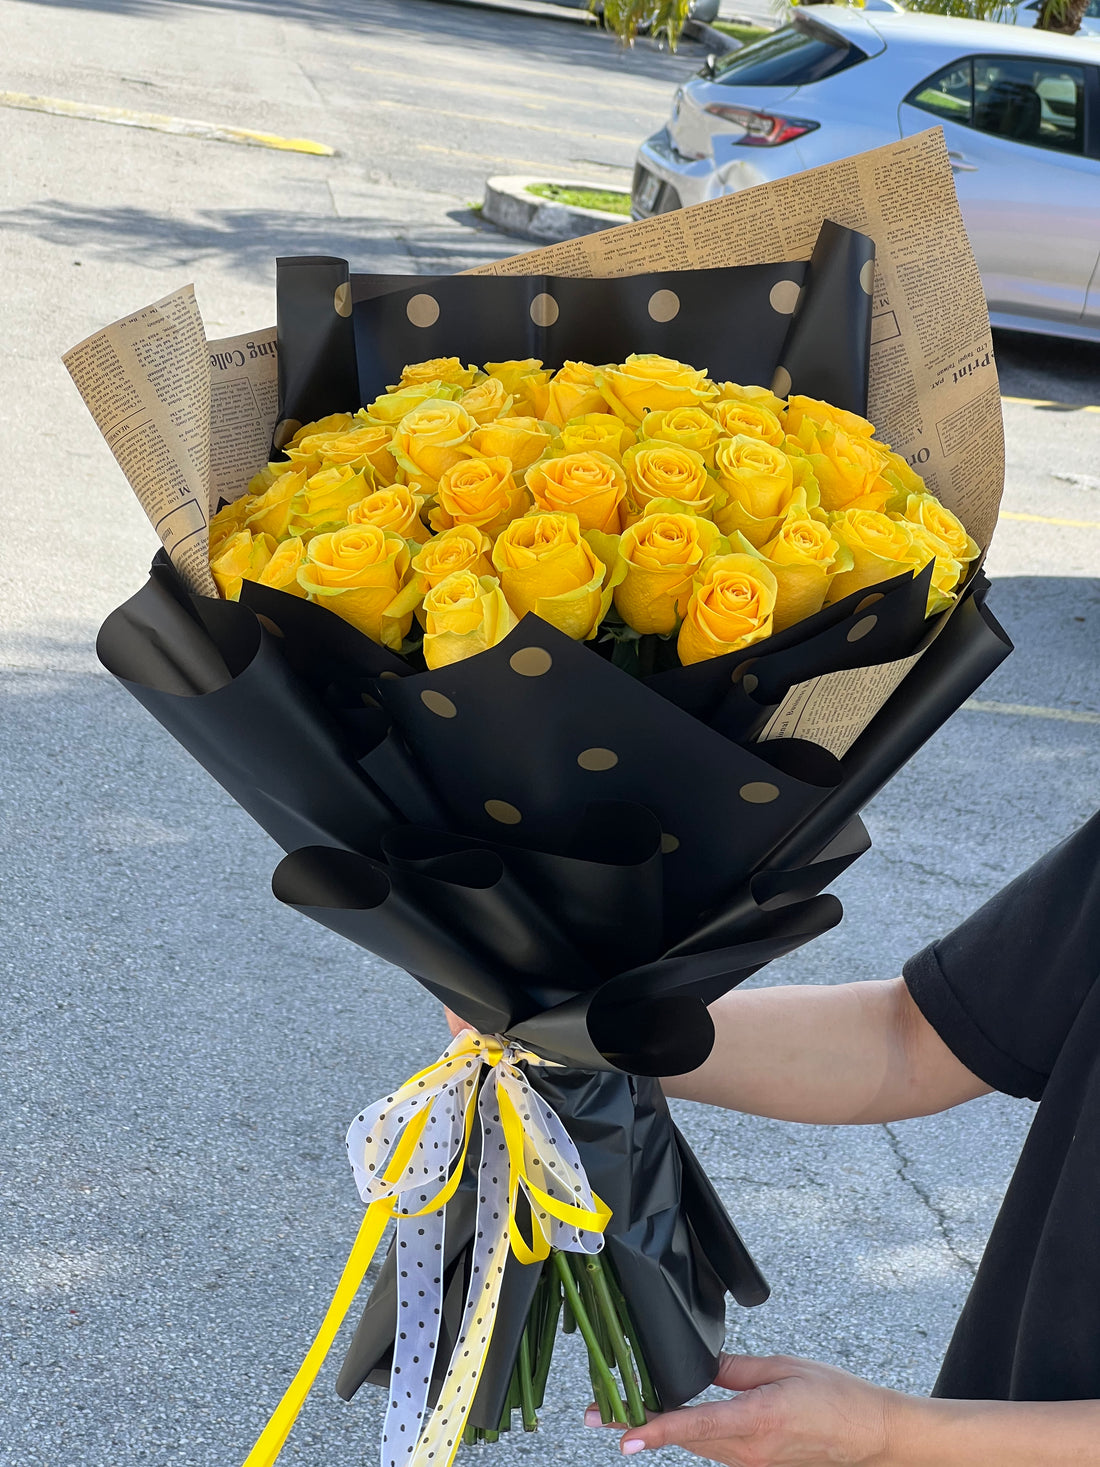 Sunshine - Yellow Roses Bouquet